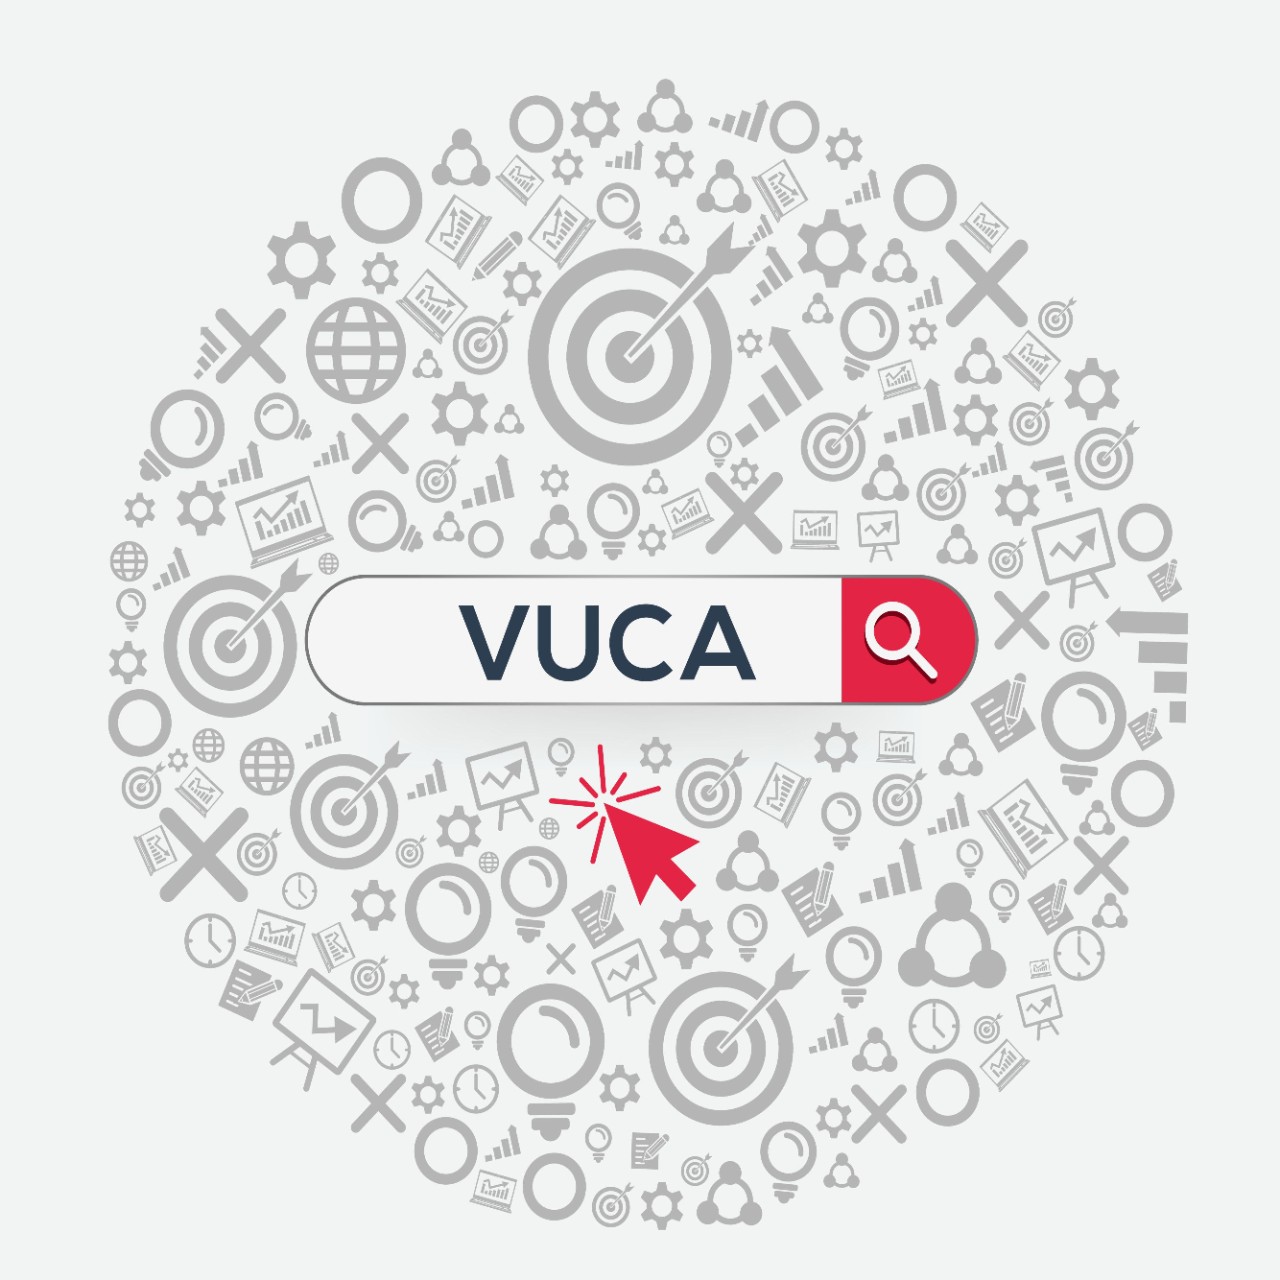 vuca-volatility-uncertainty-complexity-ambiguity-economy-01